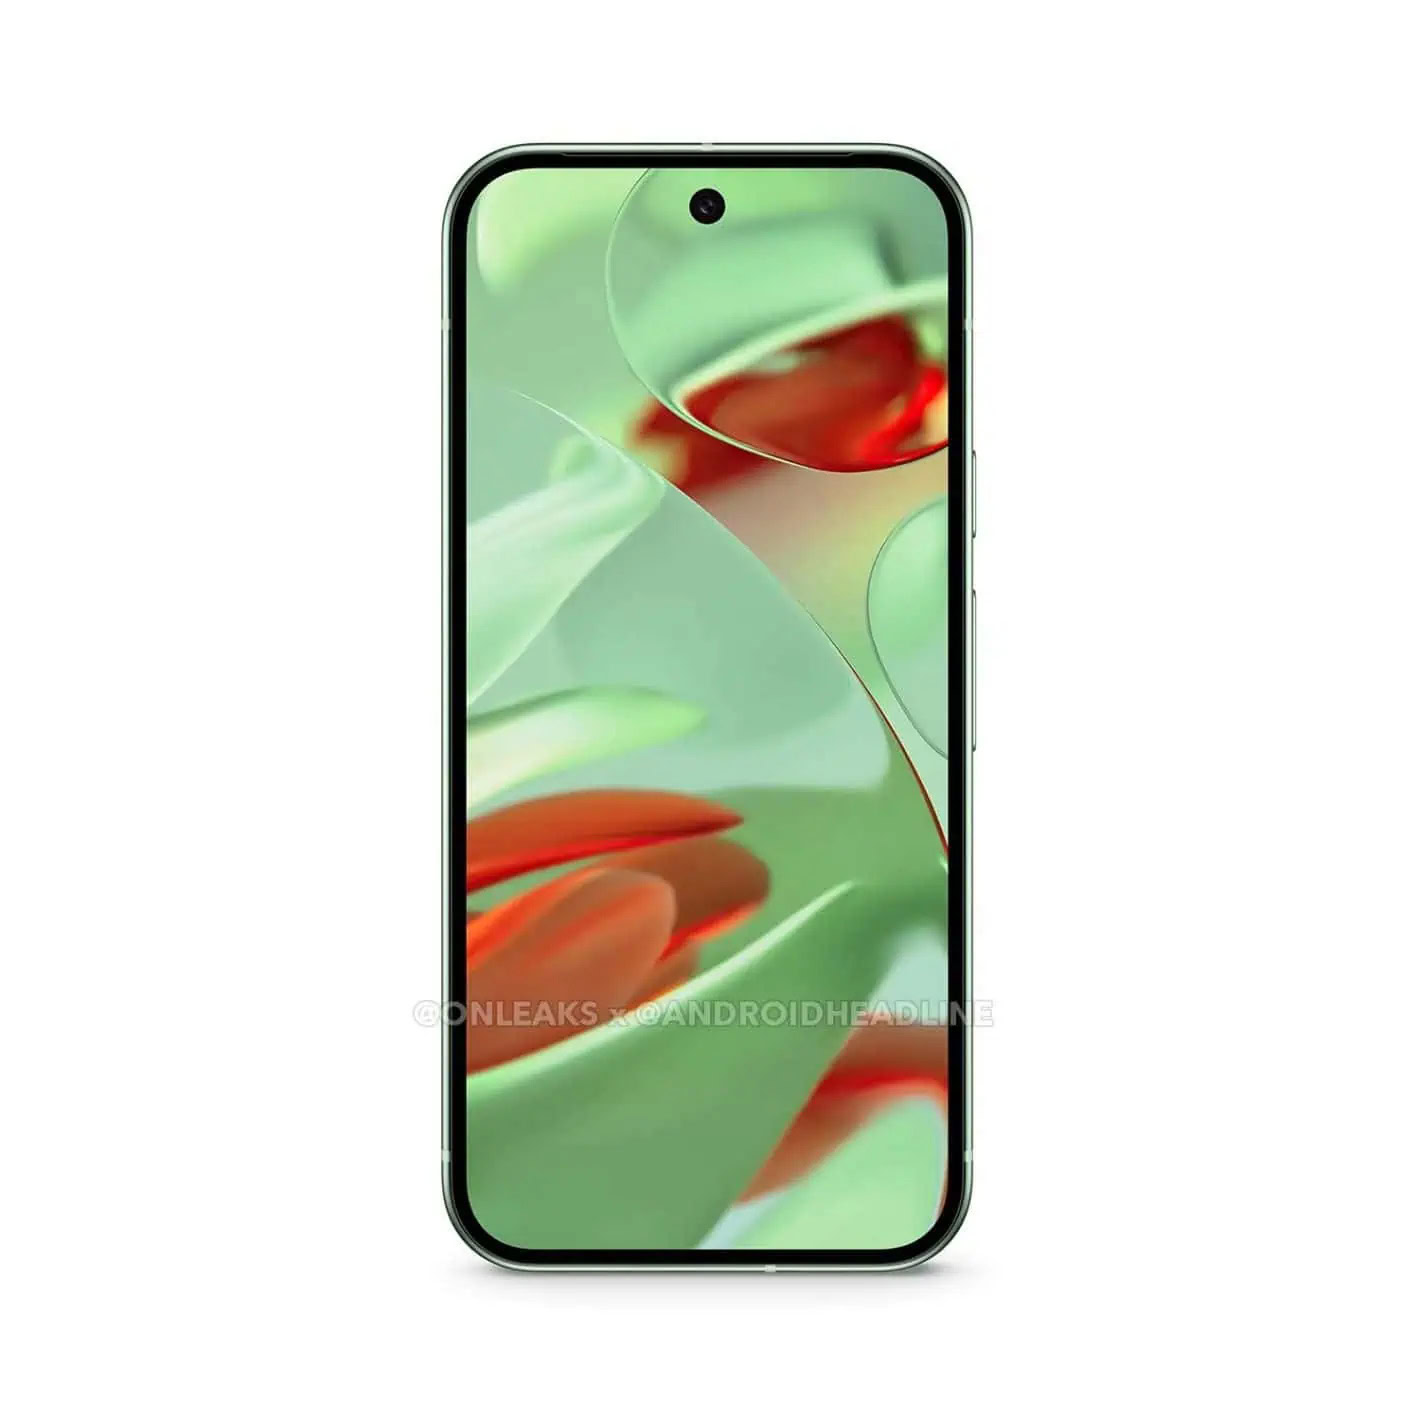 Pixel 9 Green 1 Leaked image